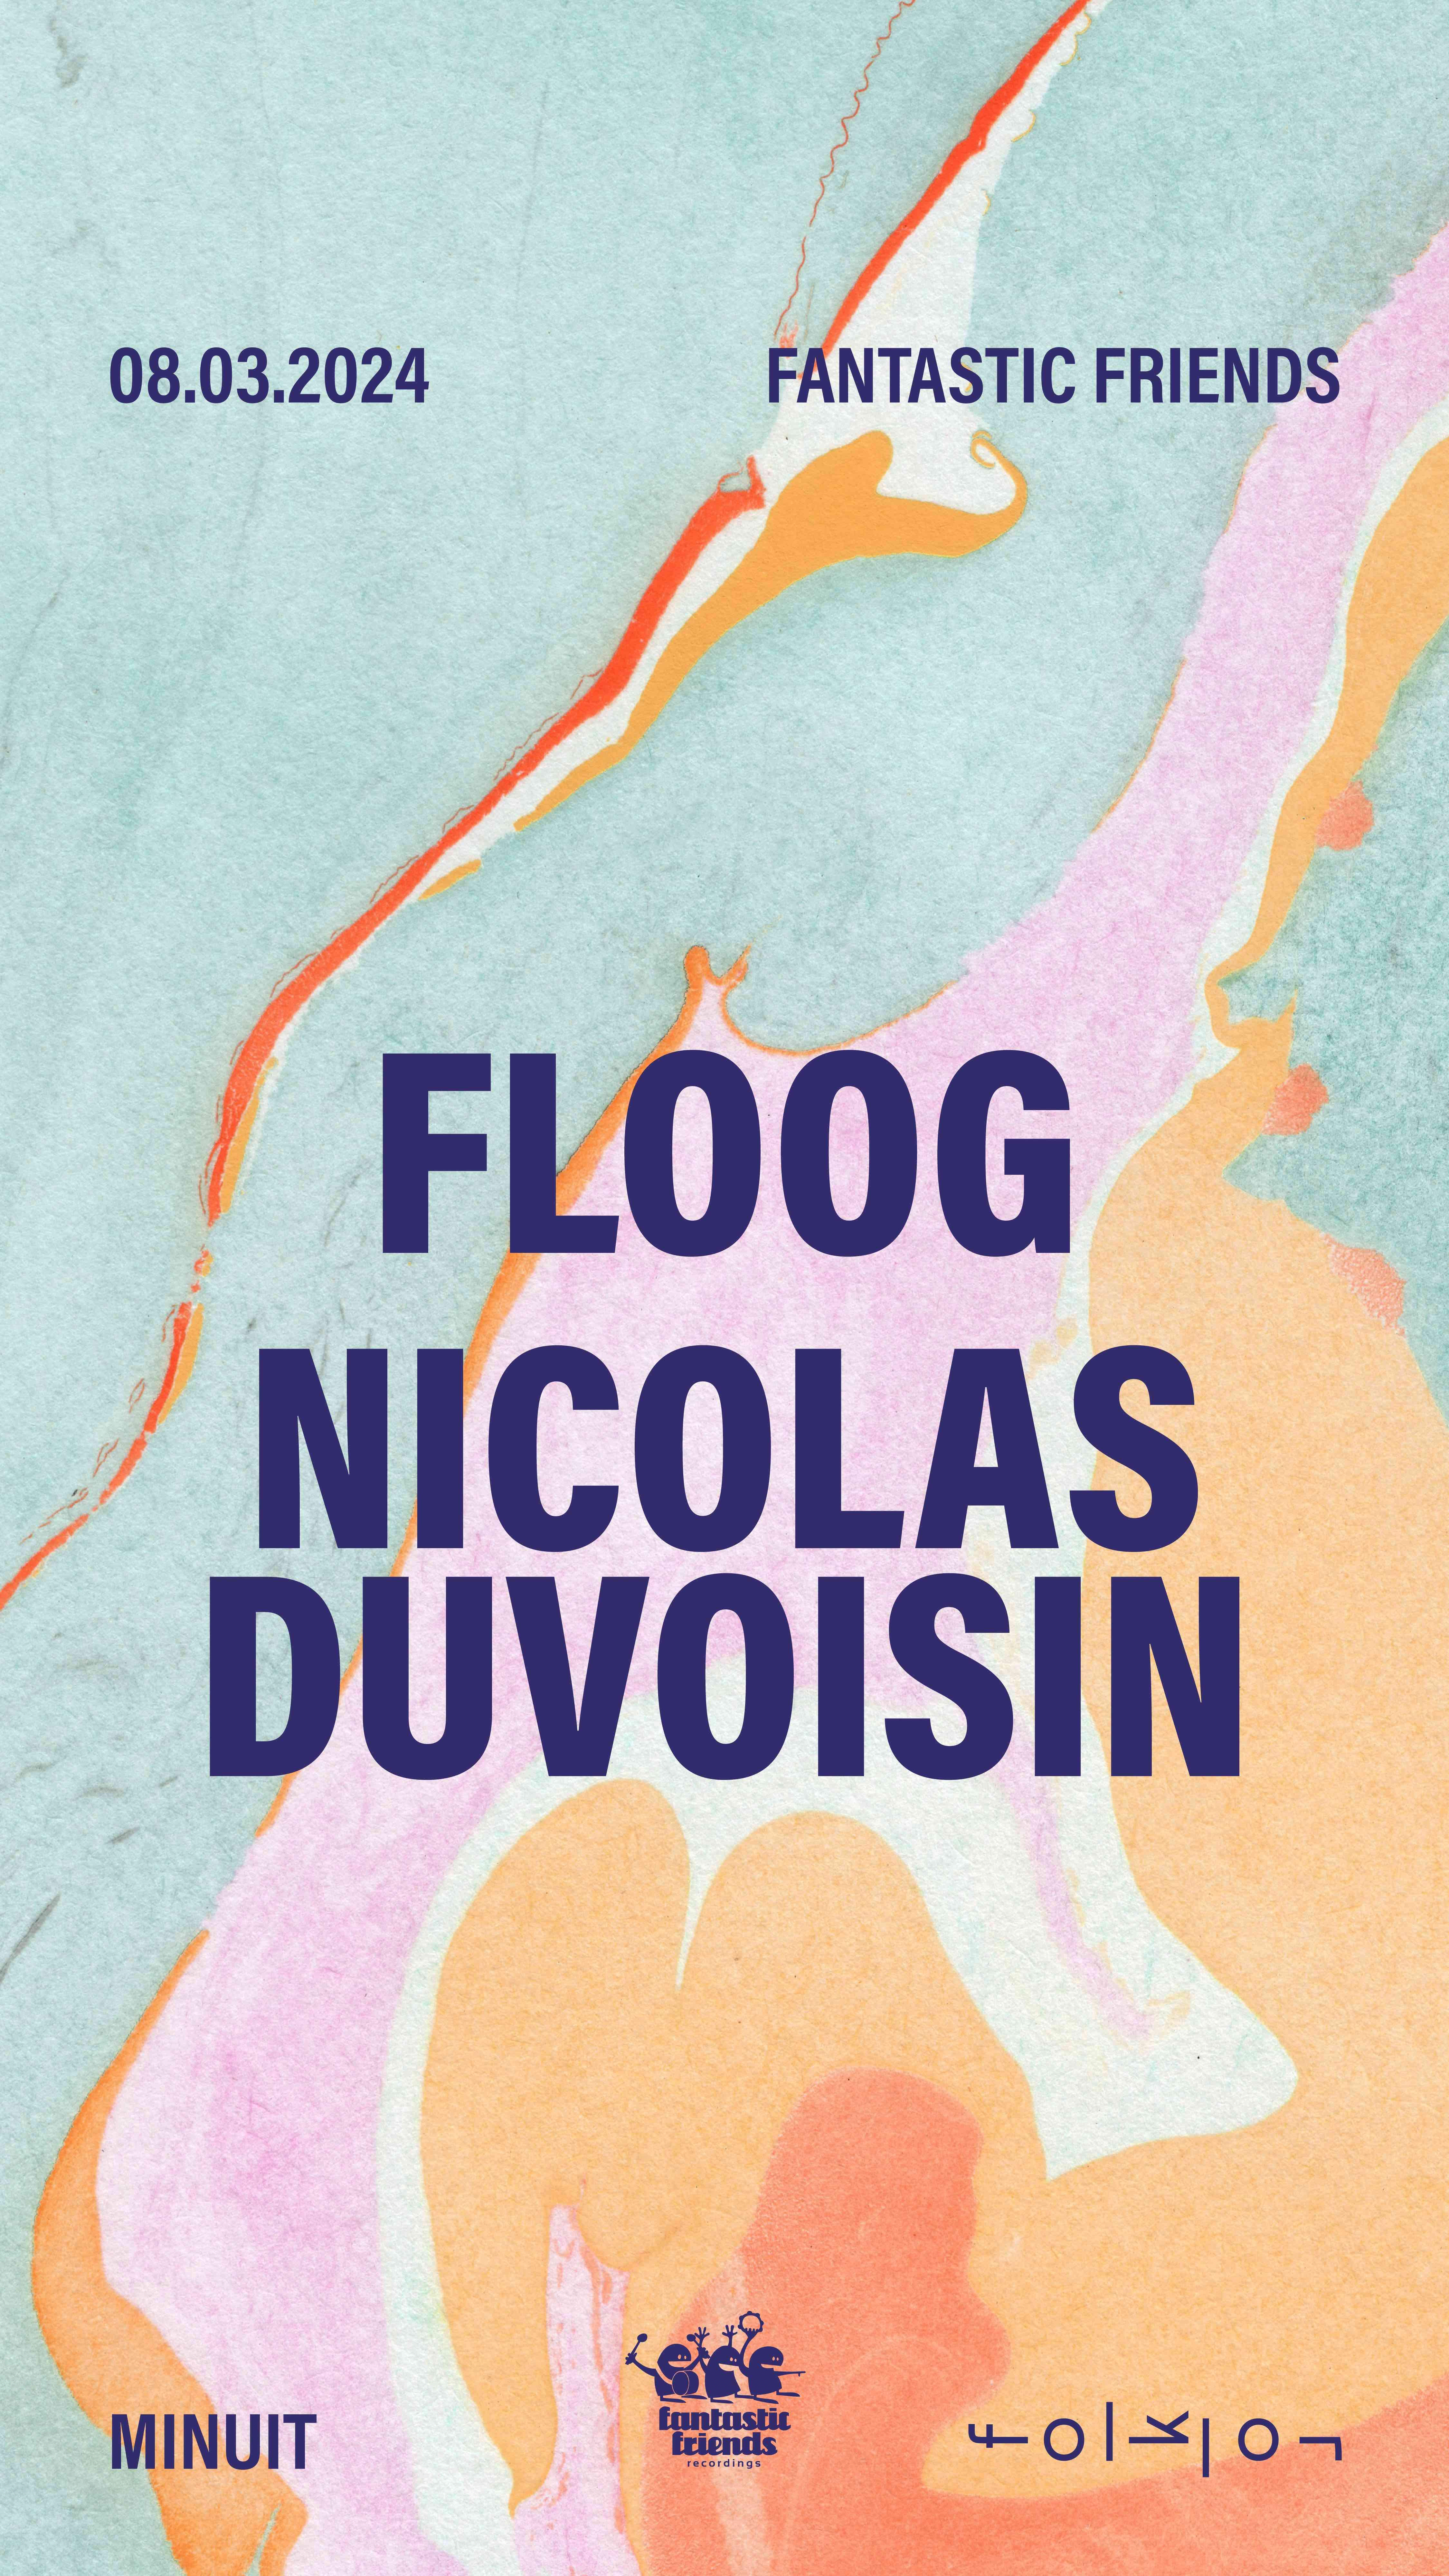 Fantastic Friends /// Floog - Nicolas Duvoisin - フライヤー表